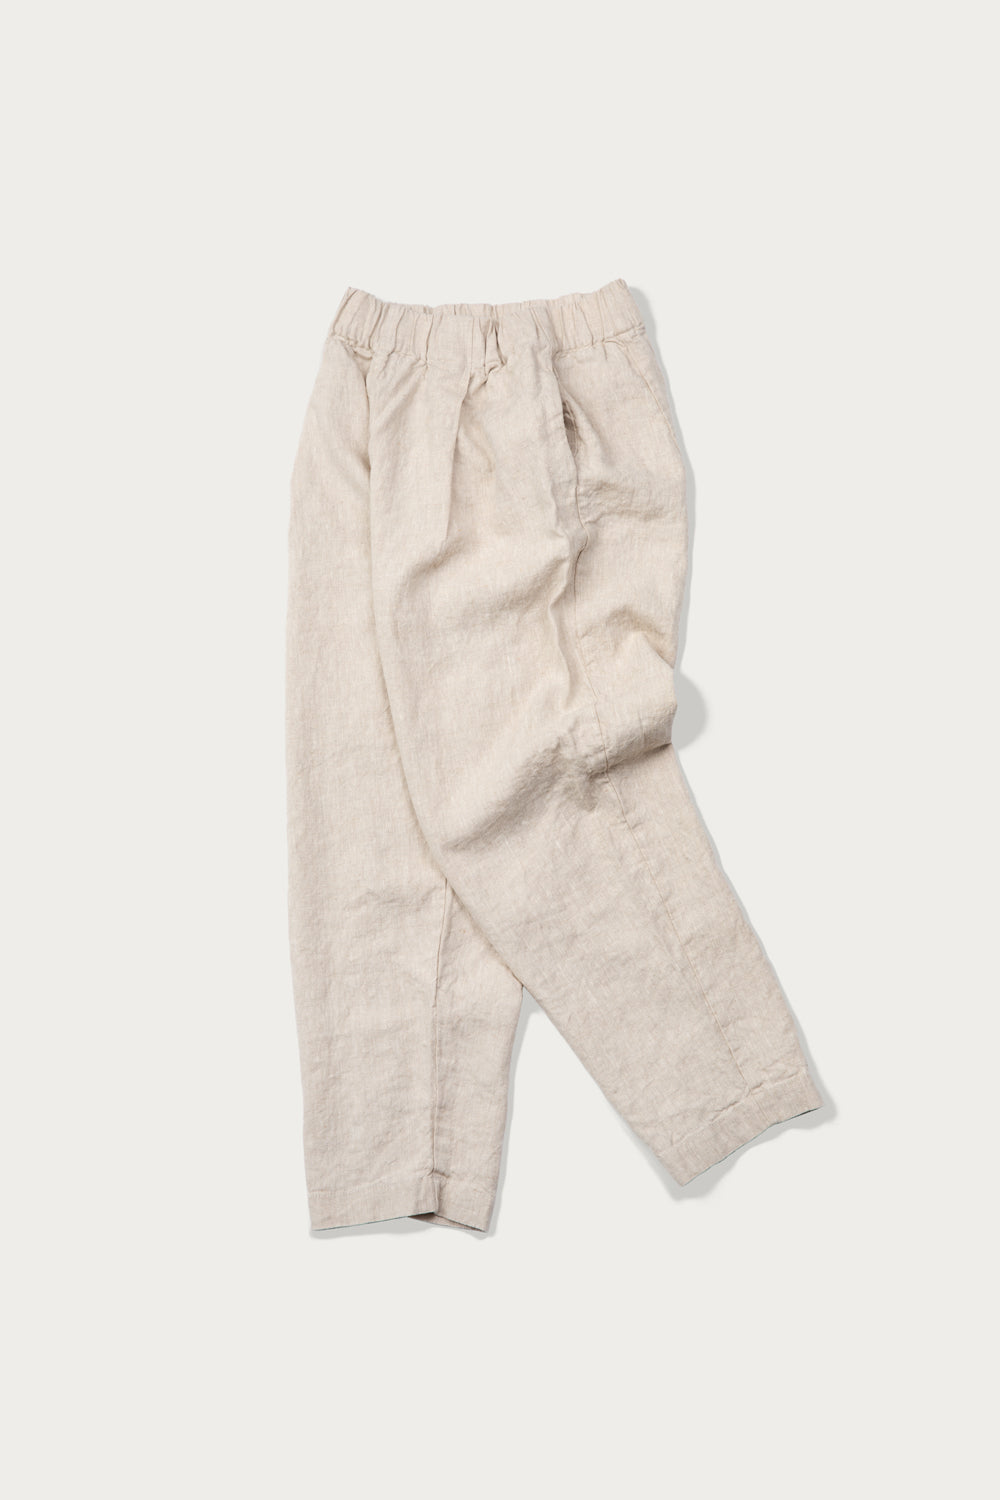 Linen Pants for Men, Beige Lounge Pants, Linen Trousers, Mans Pants,  Natural Flax Trousers, Pajama Pants, Spring Summer Trousers - Etsy